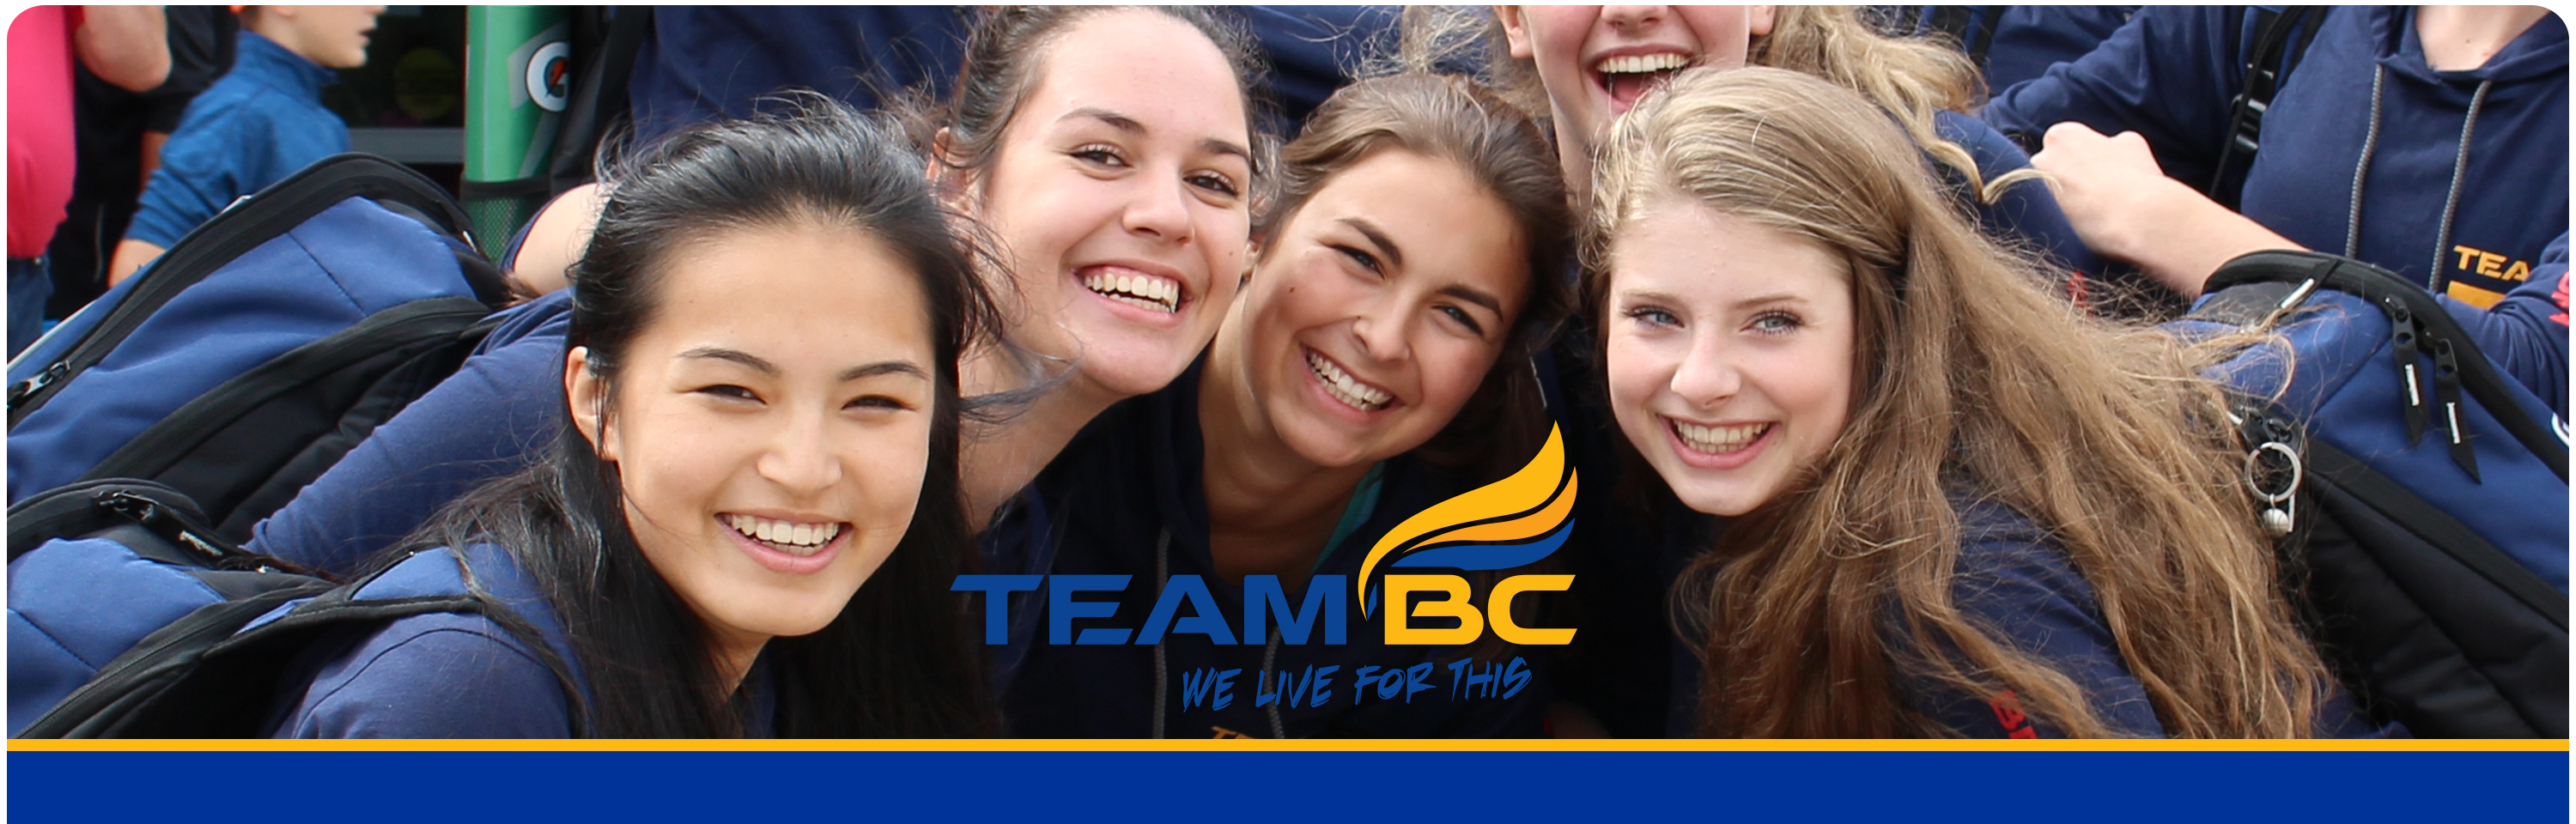 Team BC Newsletter Header